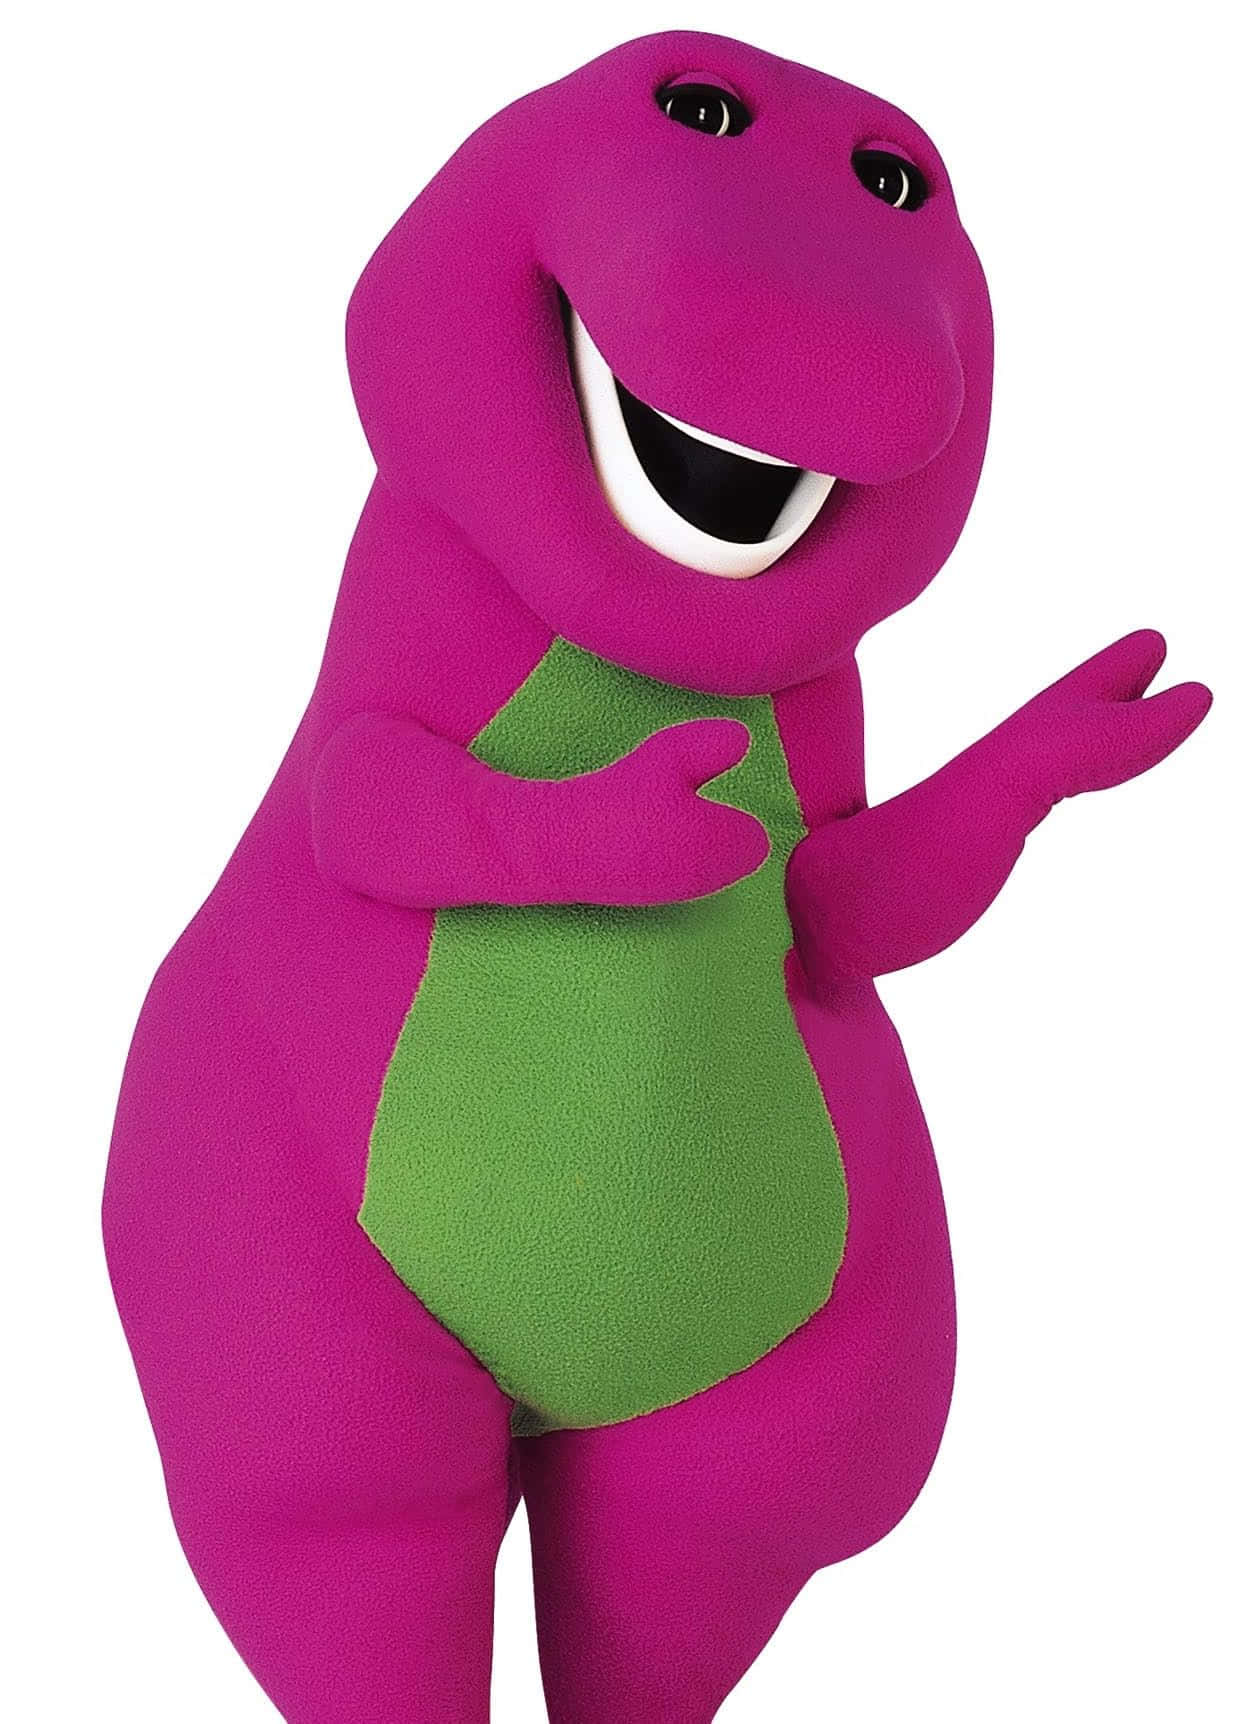 Barney, the lovable purple dinosaur, spreading smiles and joy Wallpaper